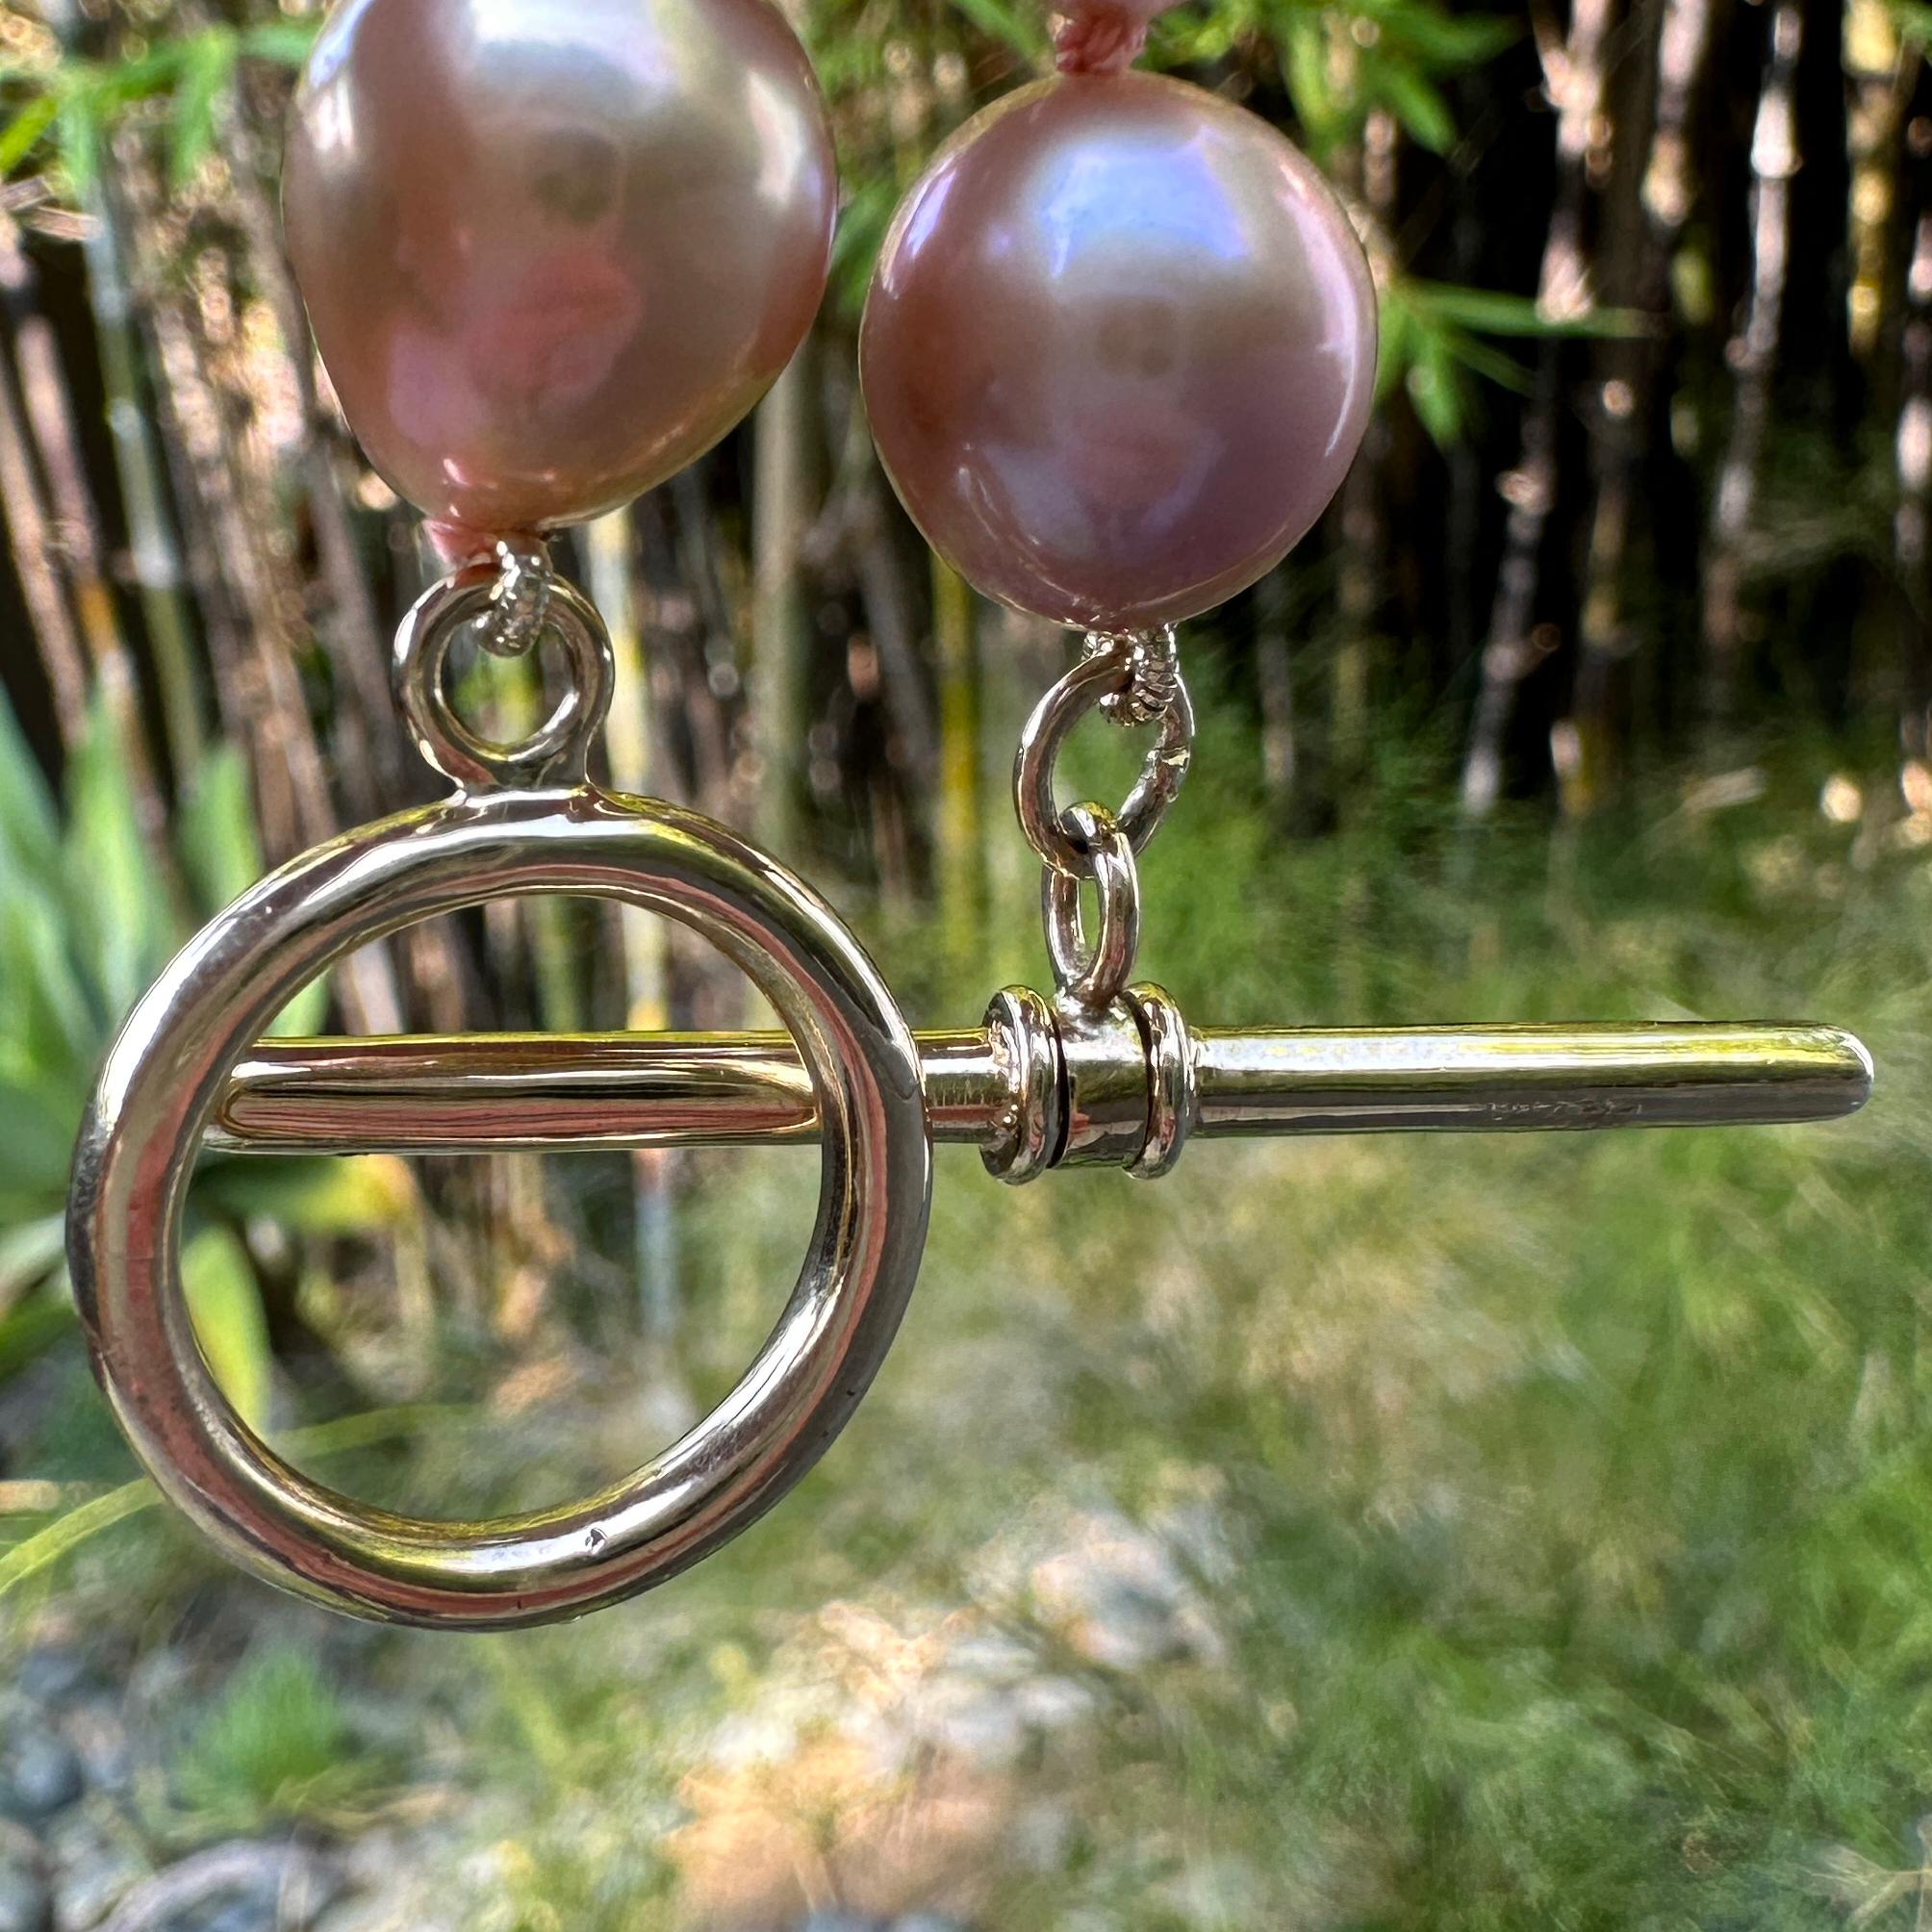 12mm-14mm Edison Baroque Pearls on 17